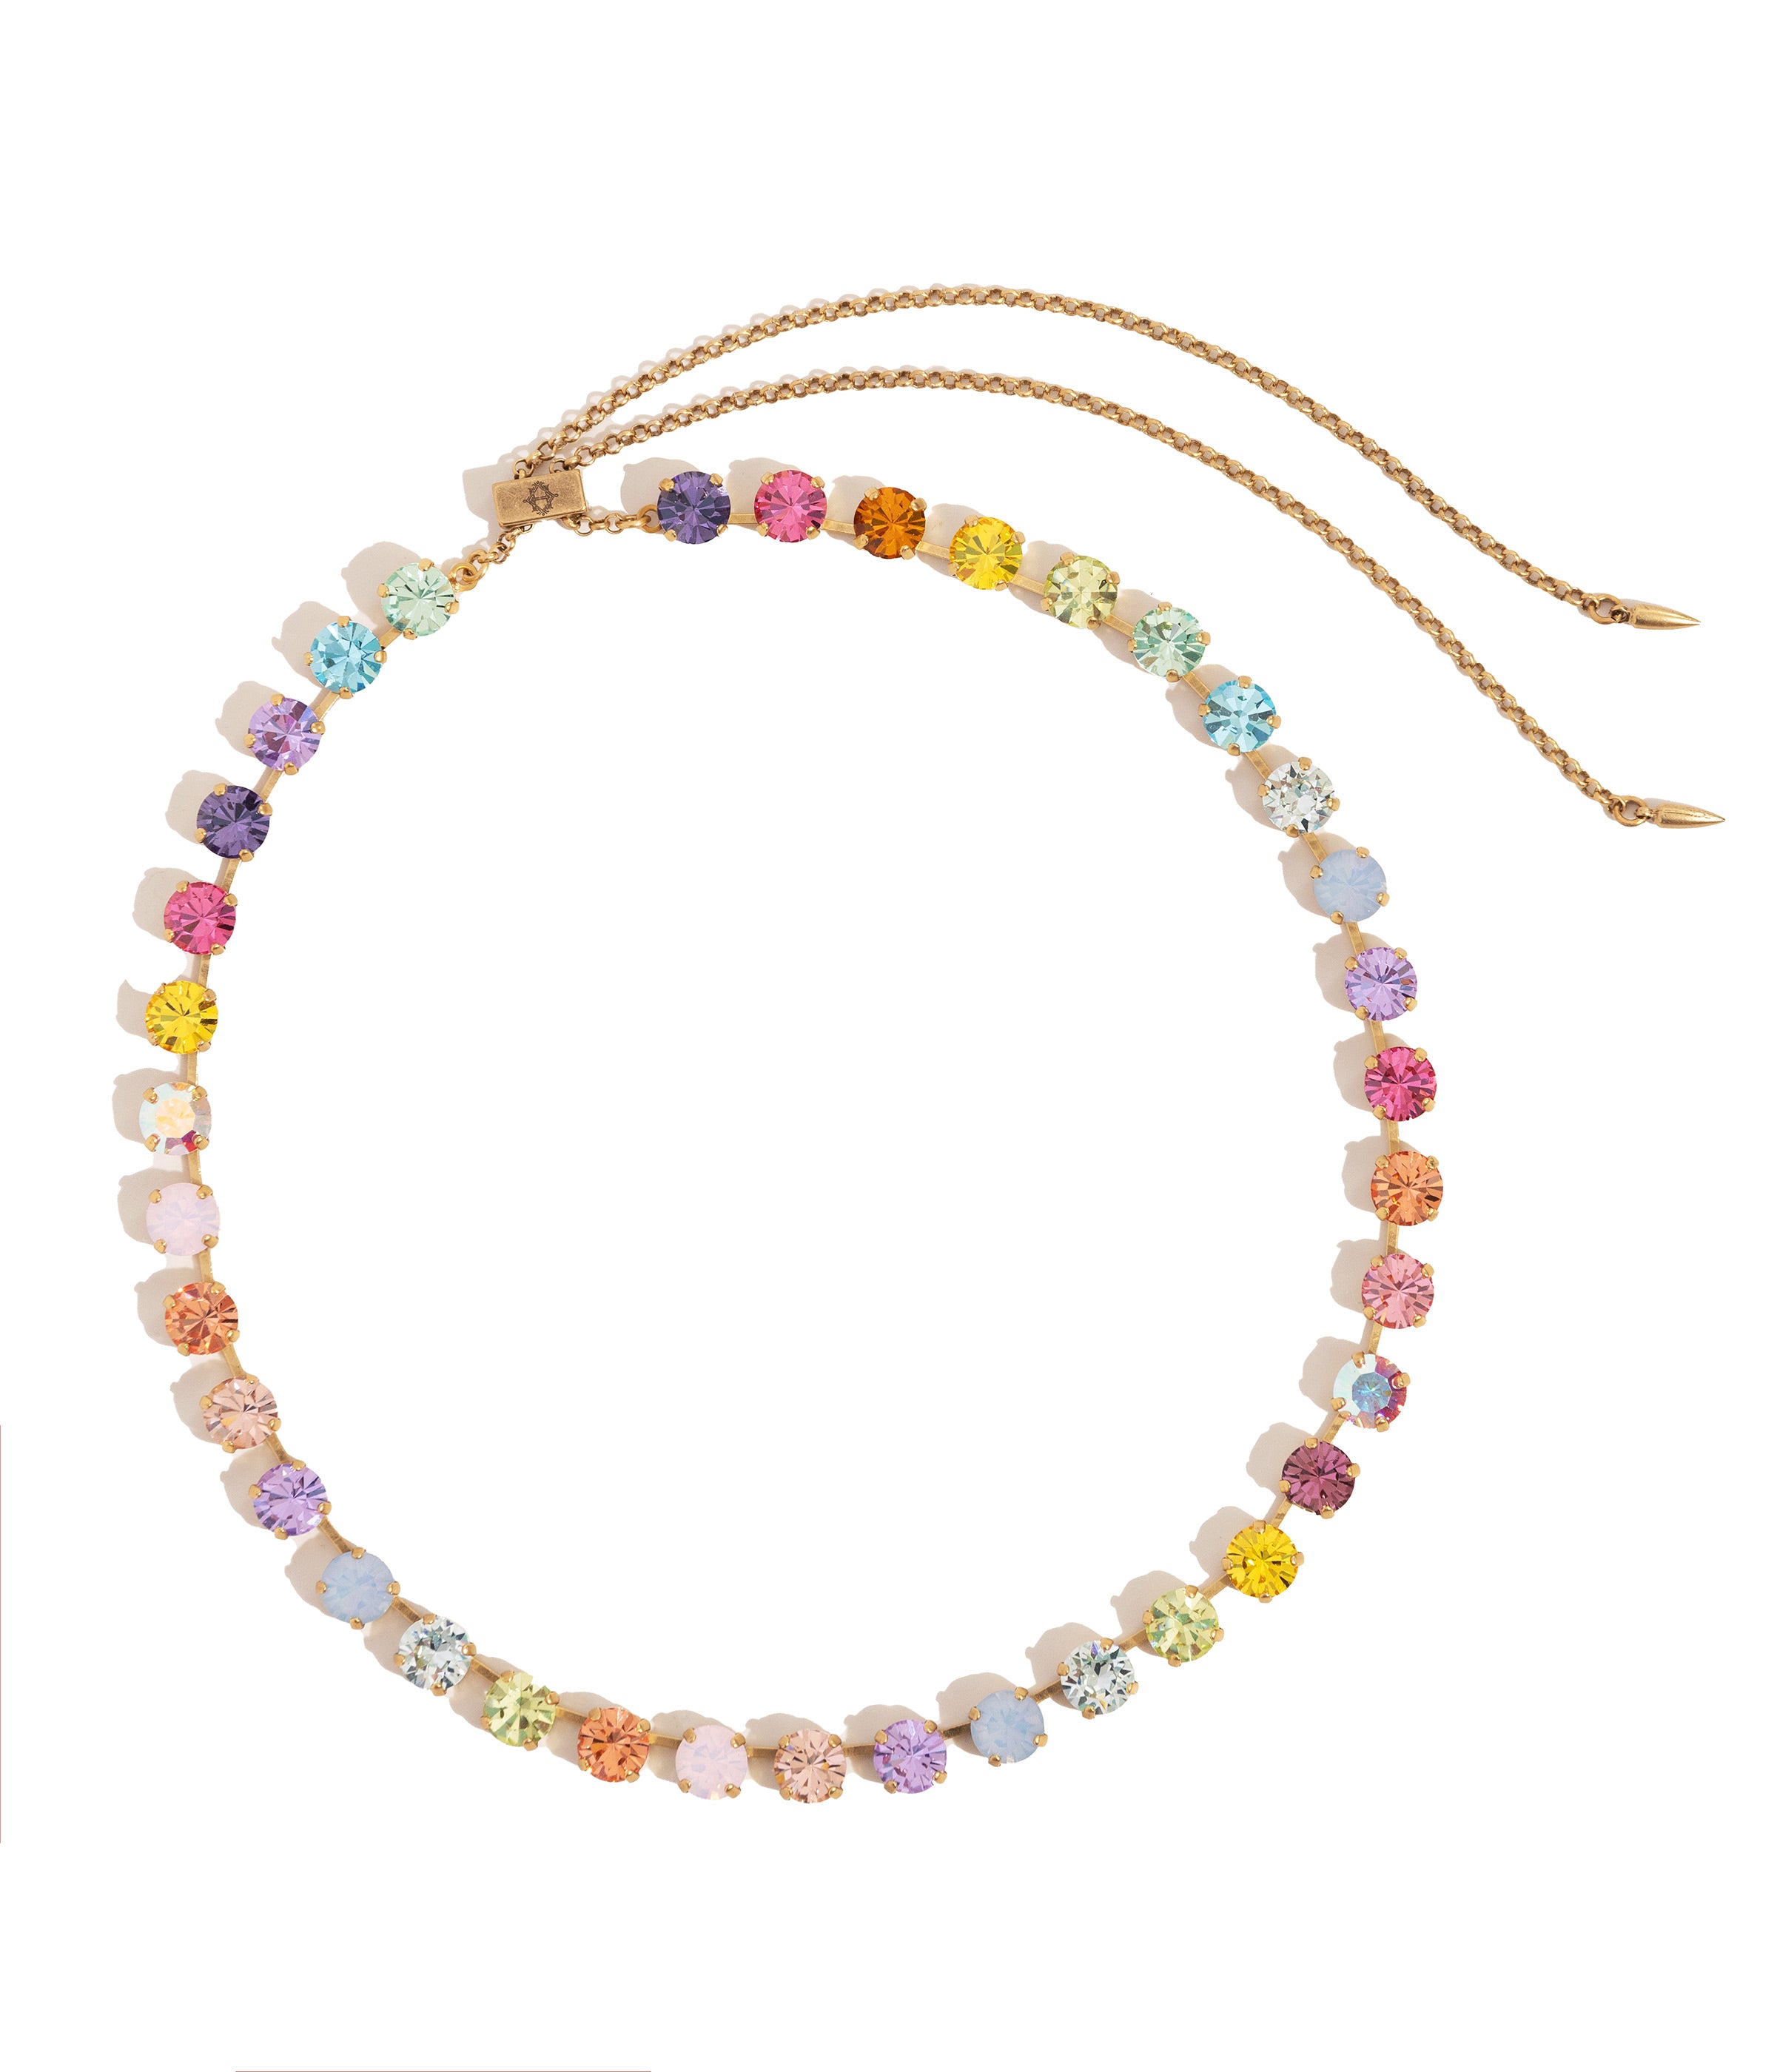 Arista Slider Necklace in Blossom Ombré